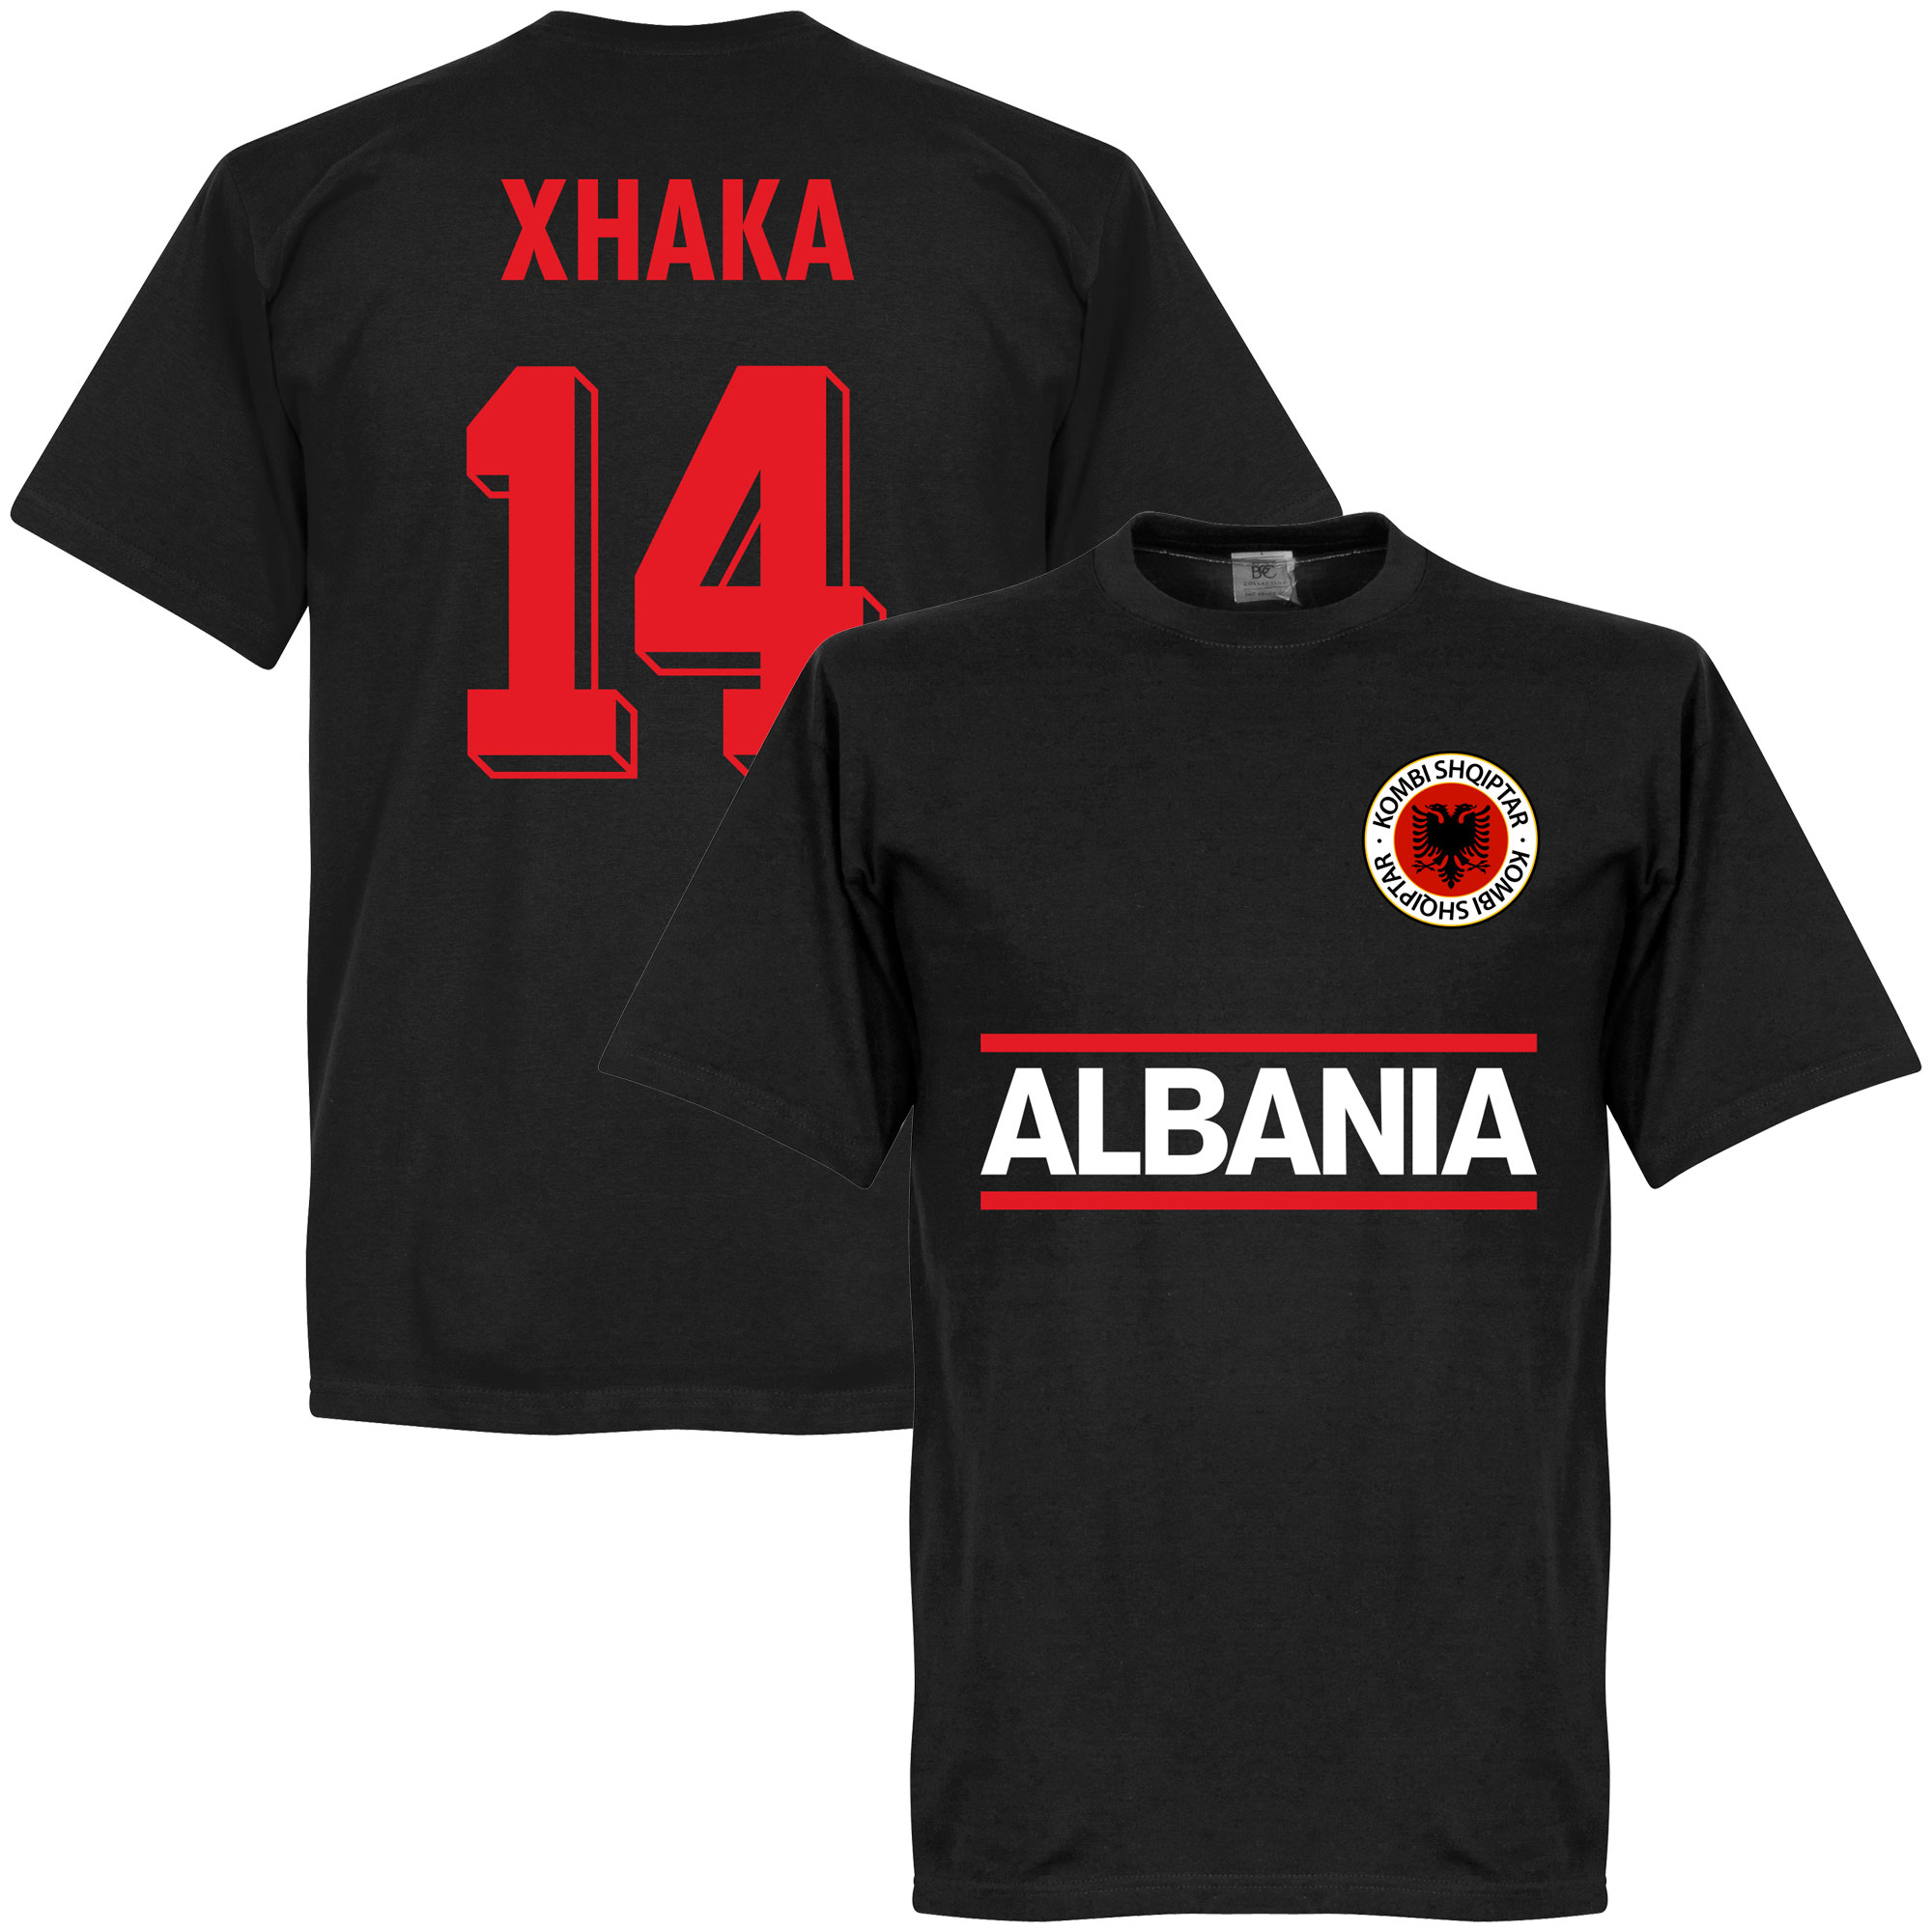 Albanië Xhaka 14 Team T-Shirt - Zwart - M